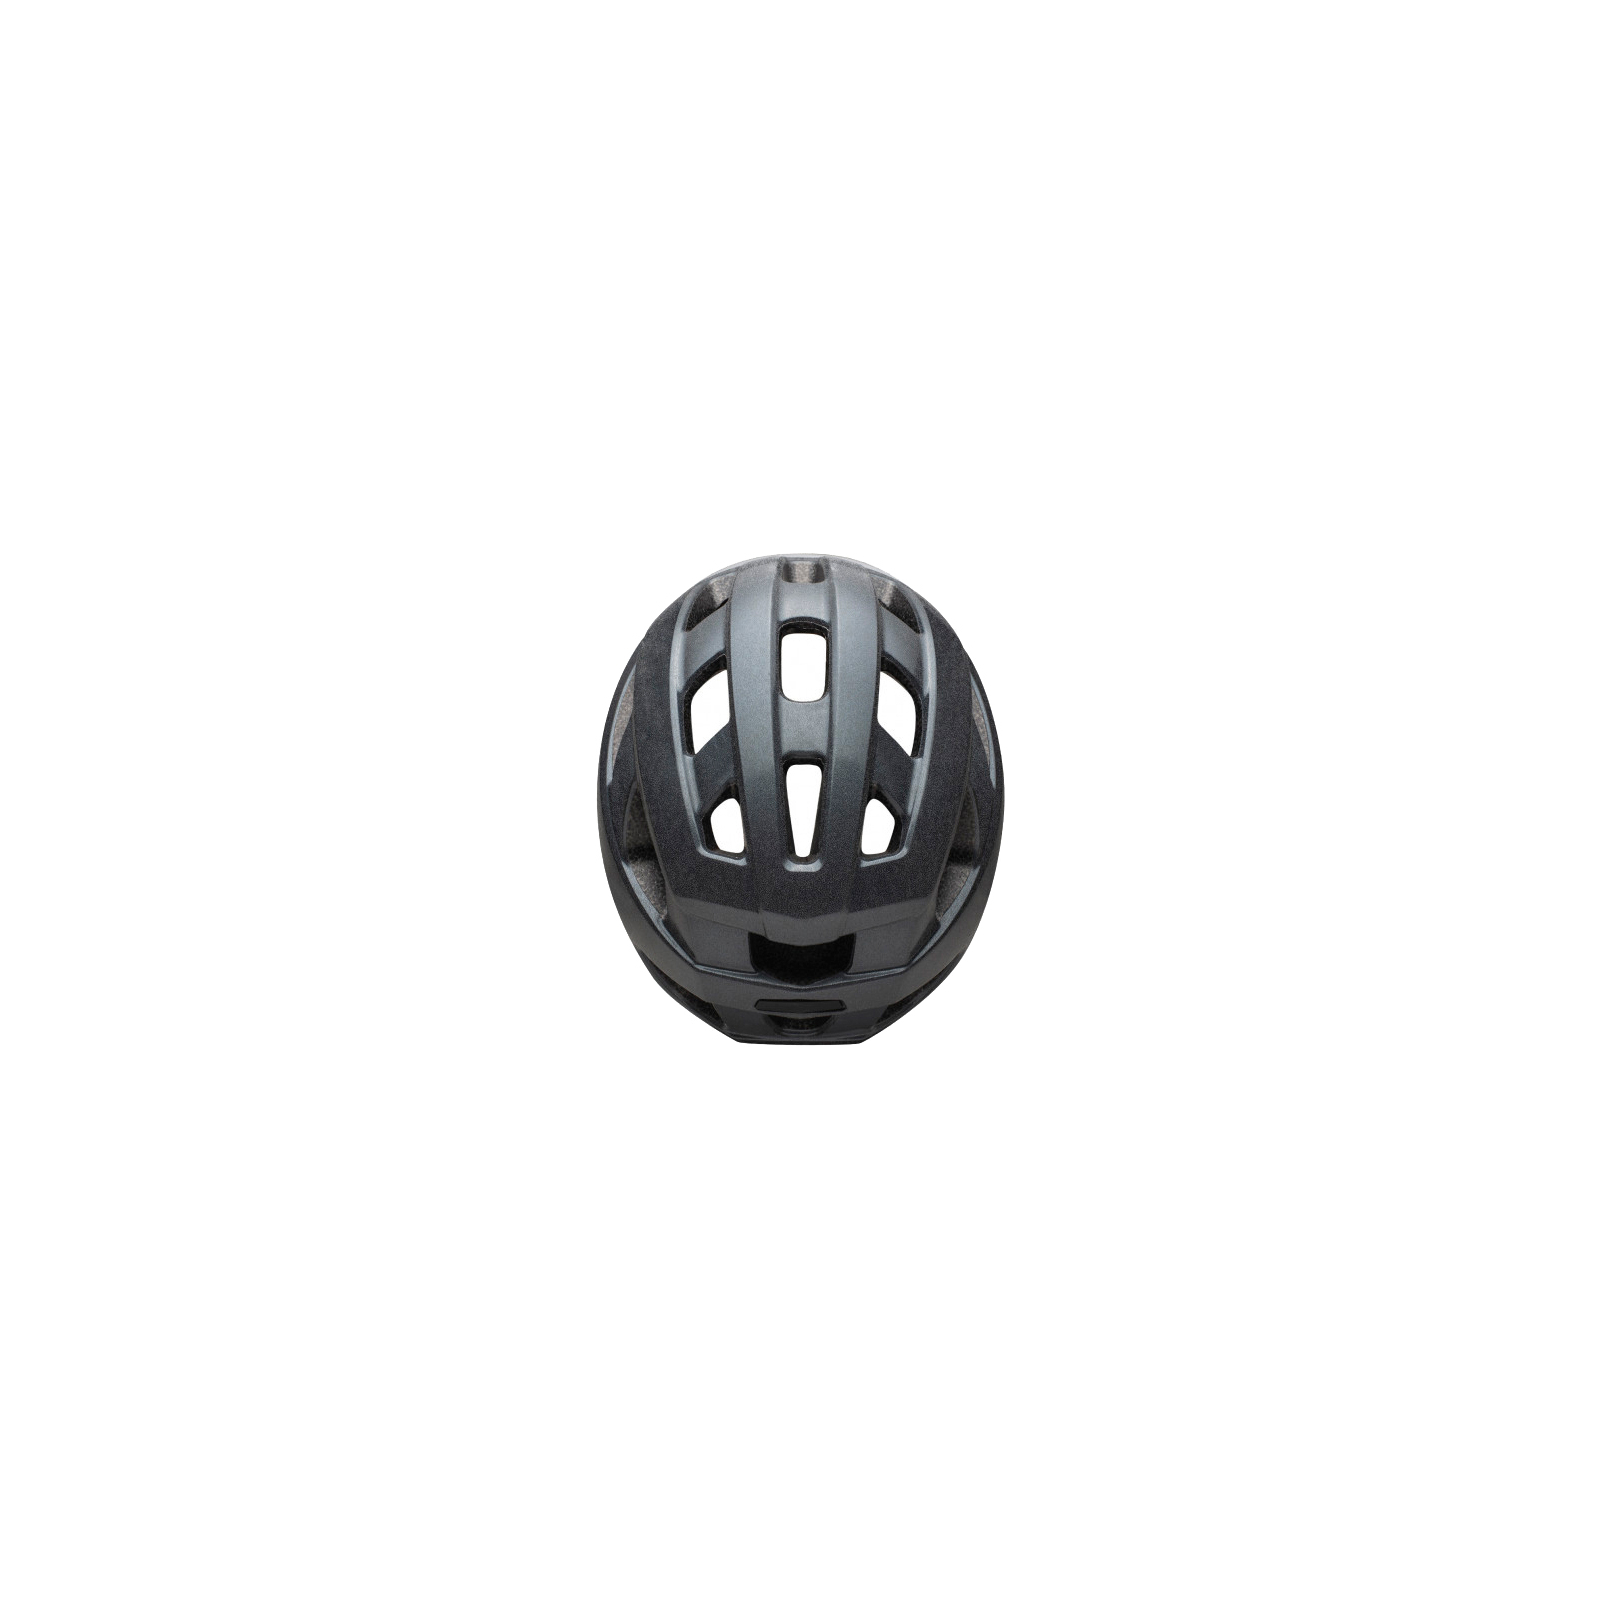 Шлем Urge Strail Металік S/M 55-59 см (UBP22692M) изображение 3